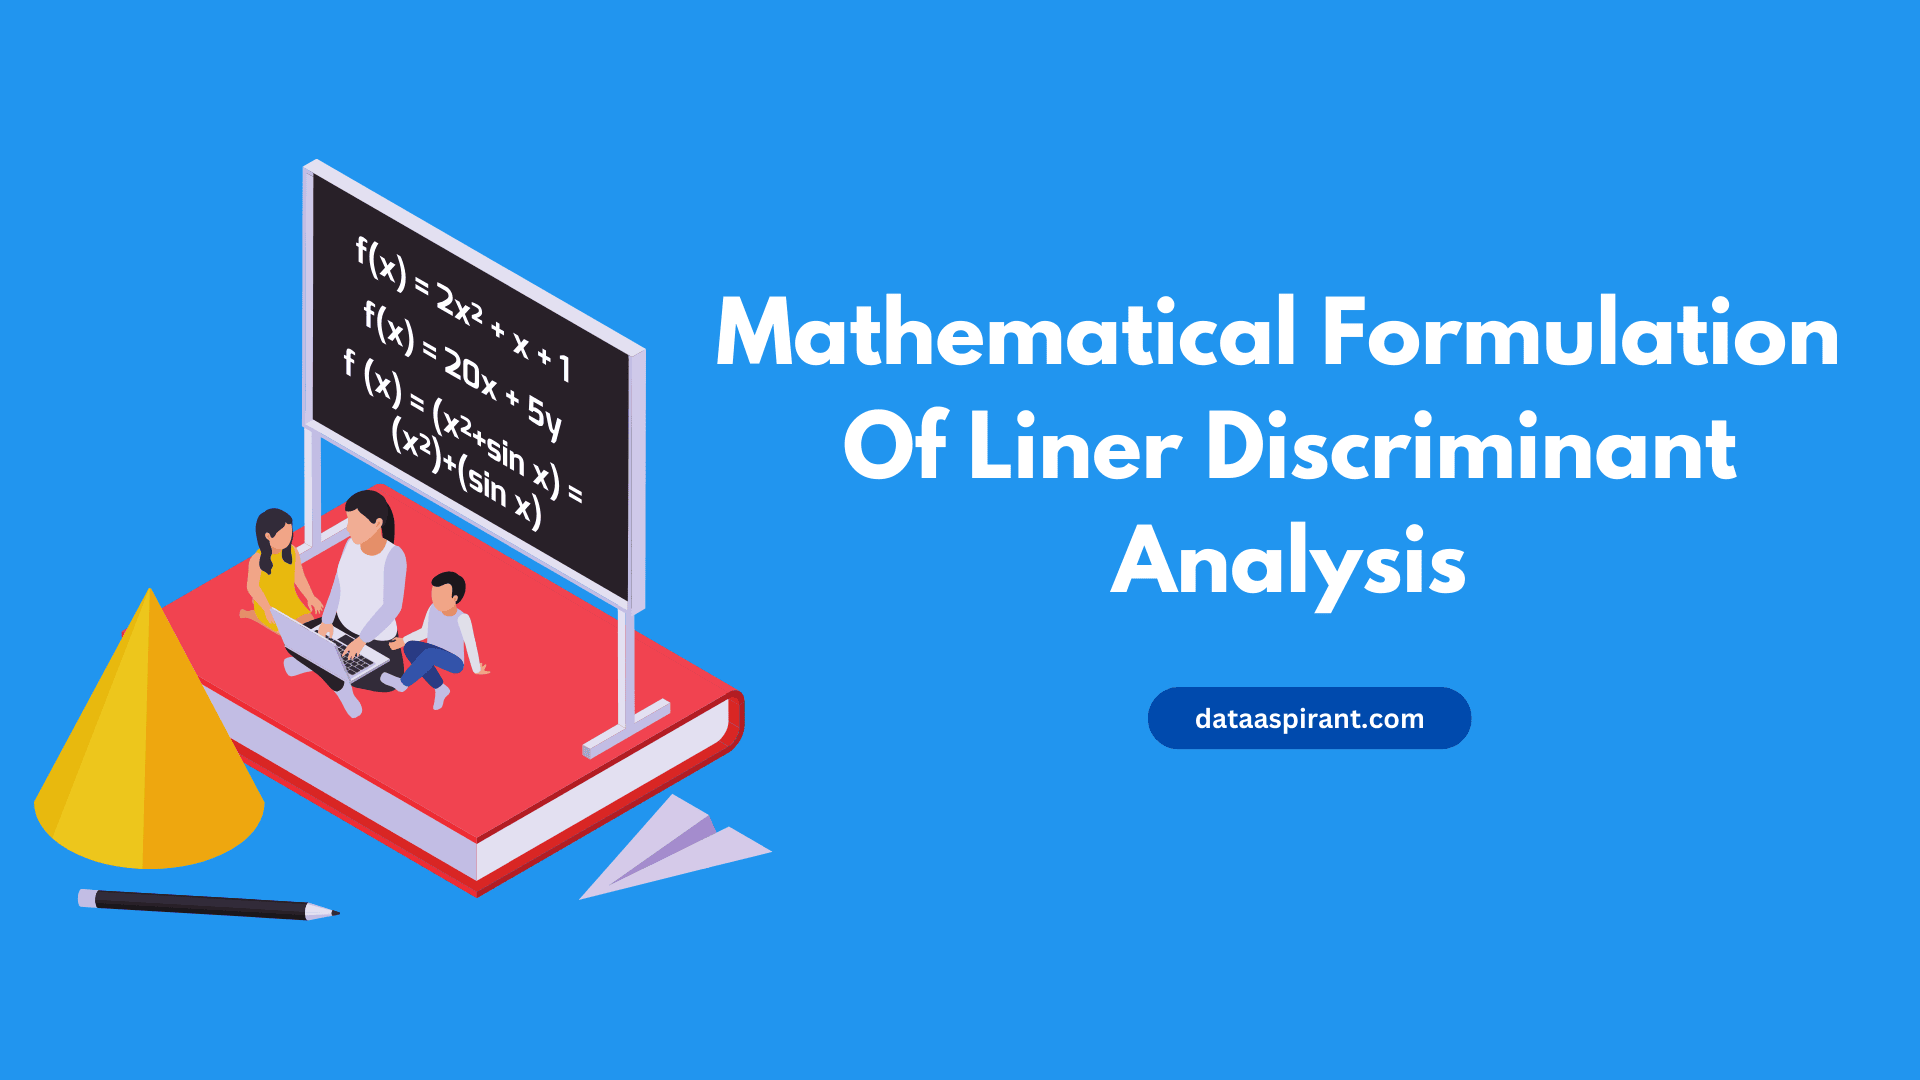 Mathematical Formulation of Linear Discriminant Analysis